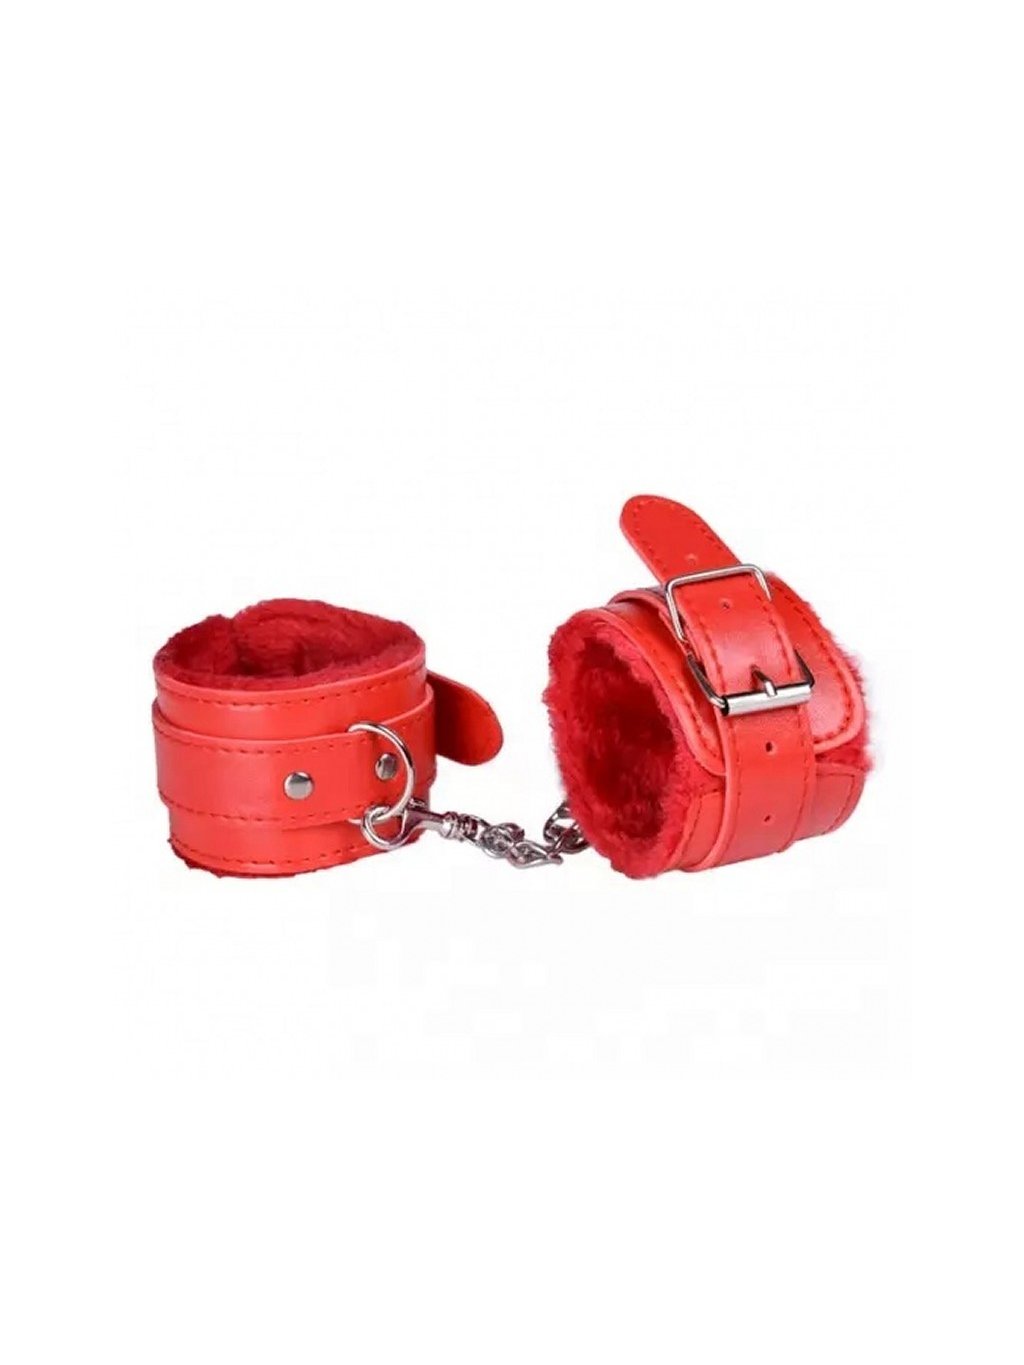 Bdsm Bondage Handcuffs Red Sexdollscz